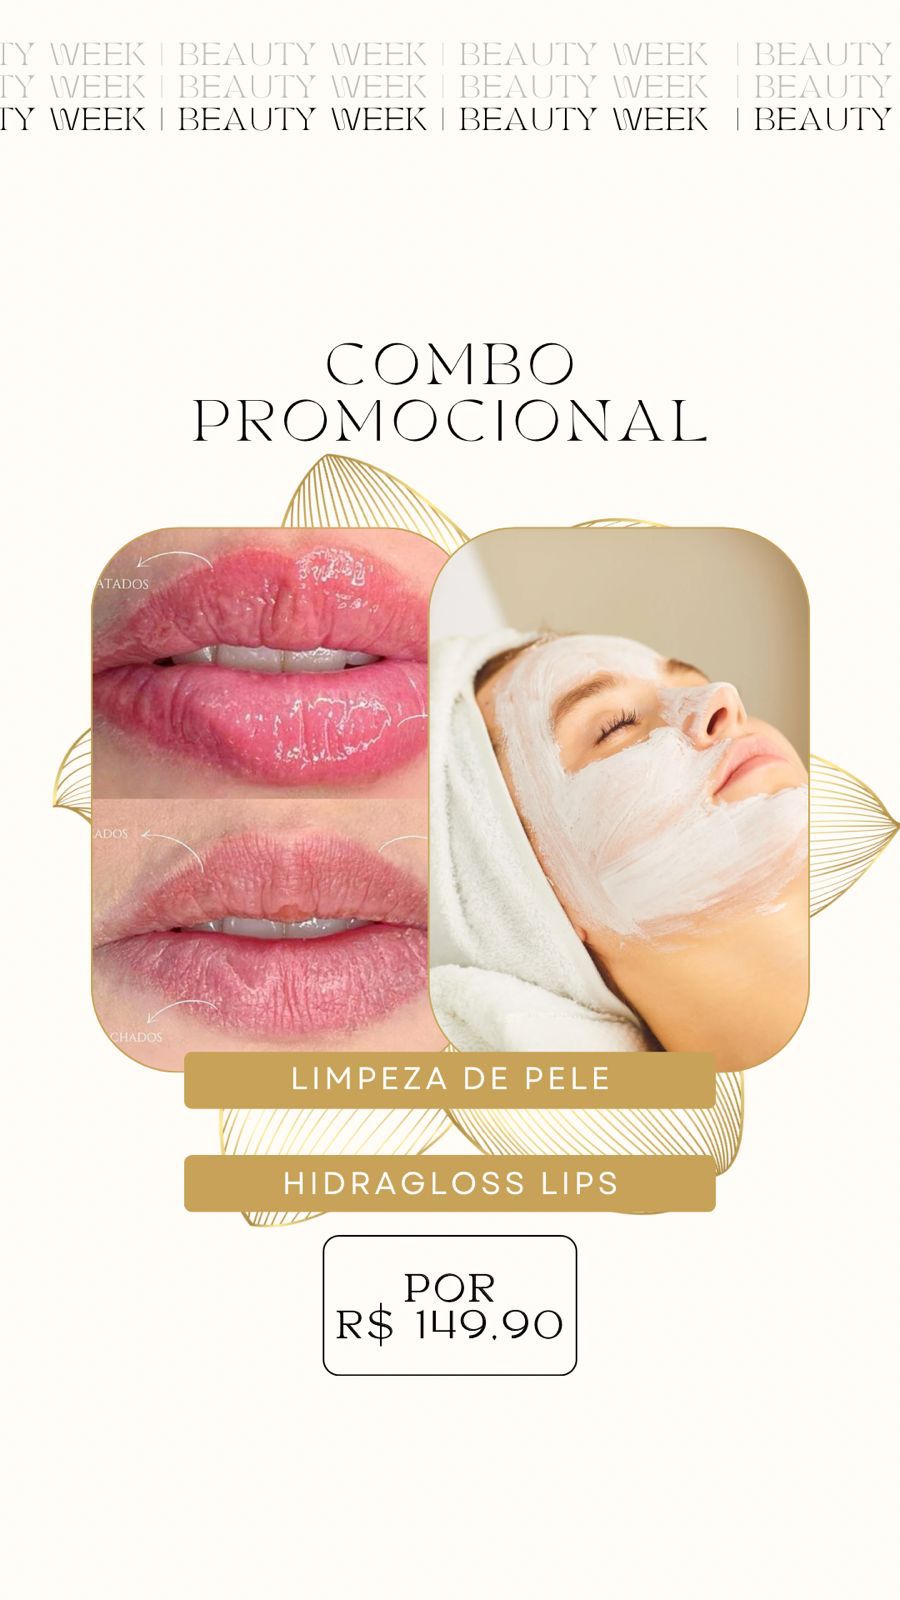 Promoção: LIMPEZA DE PELE+HIDRAGLOSS LIPS